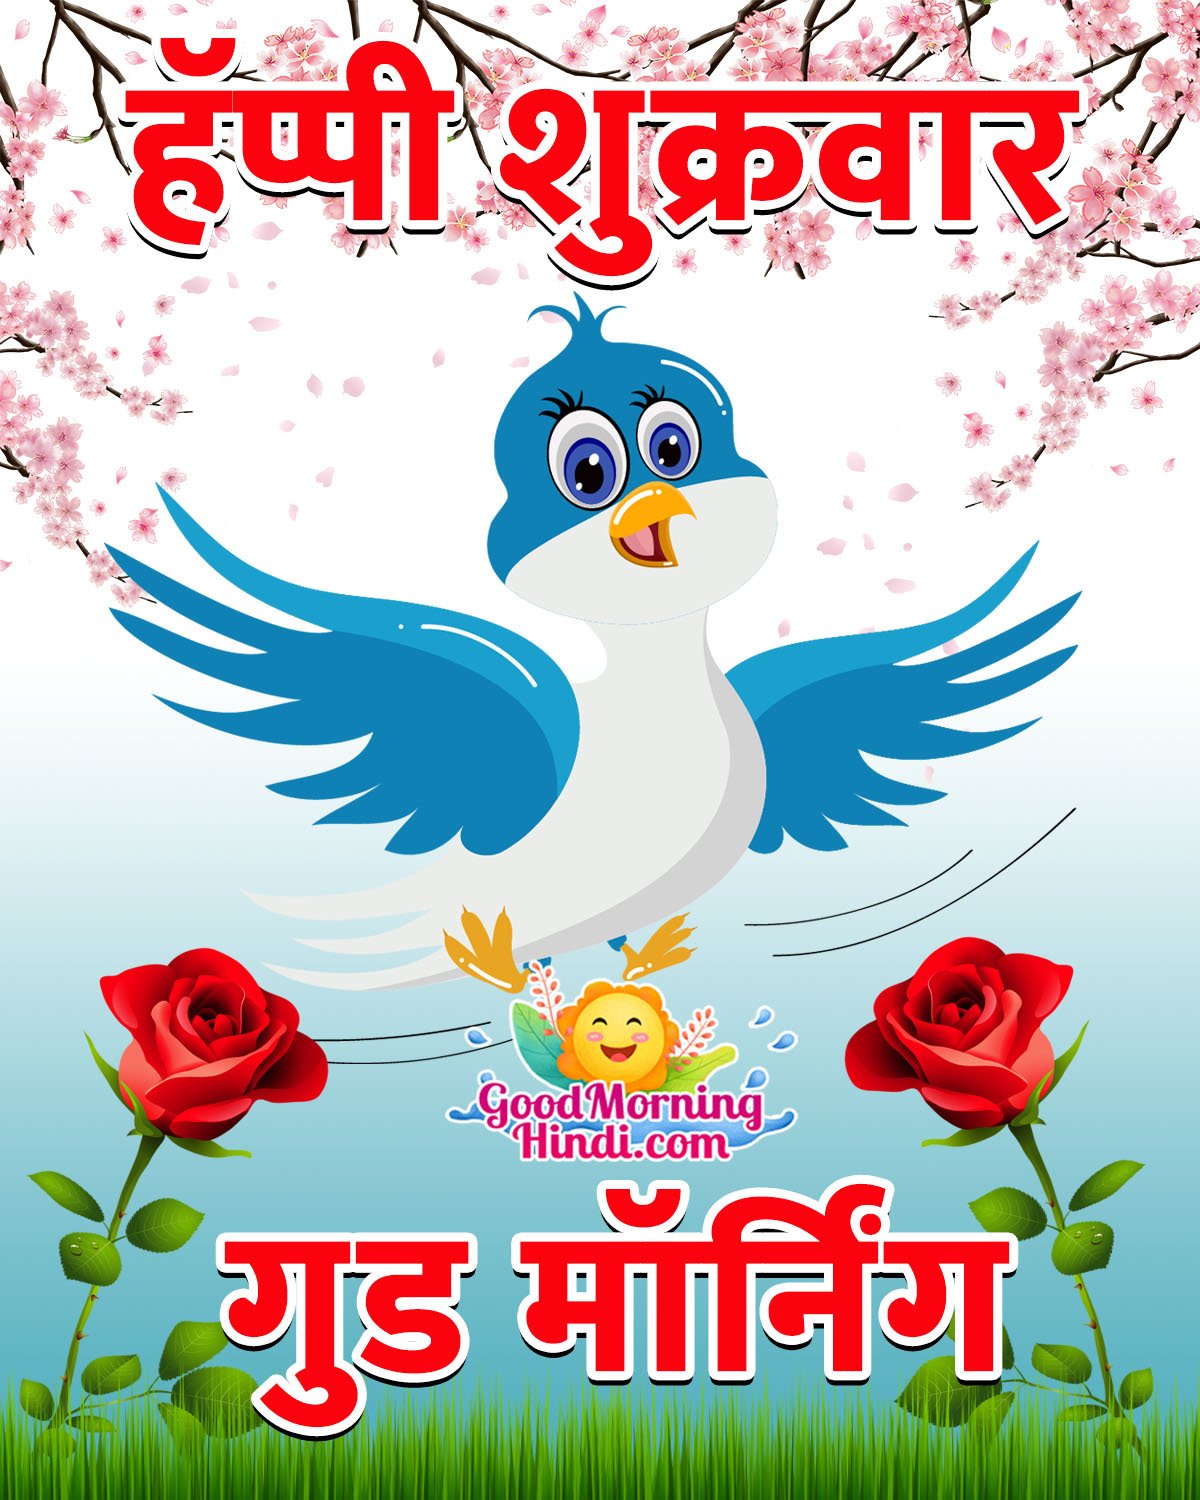 Happy Shukrawar Good Morning Image